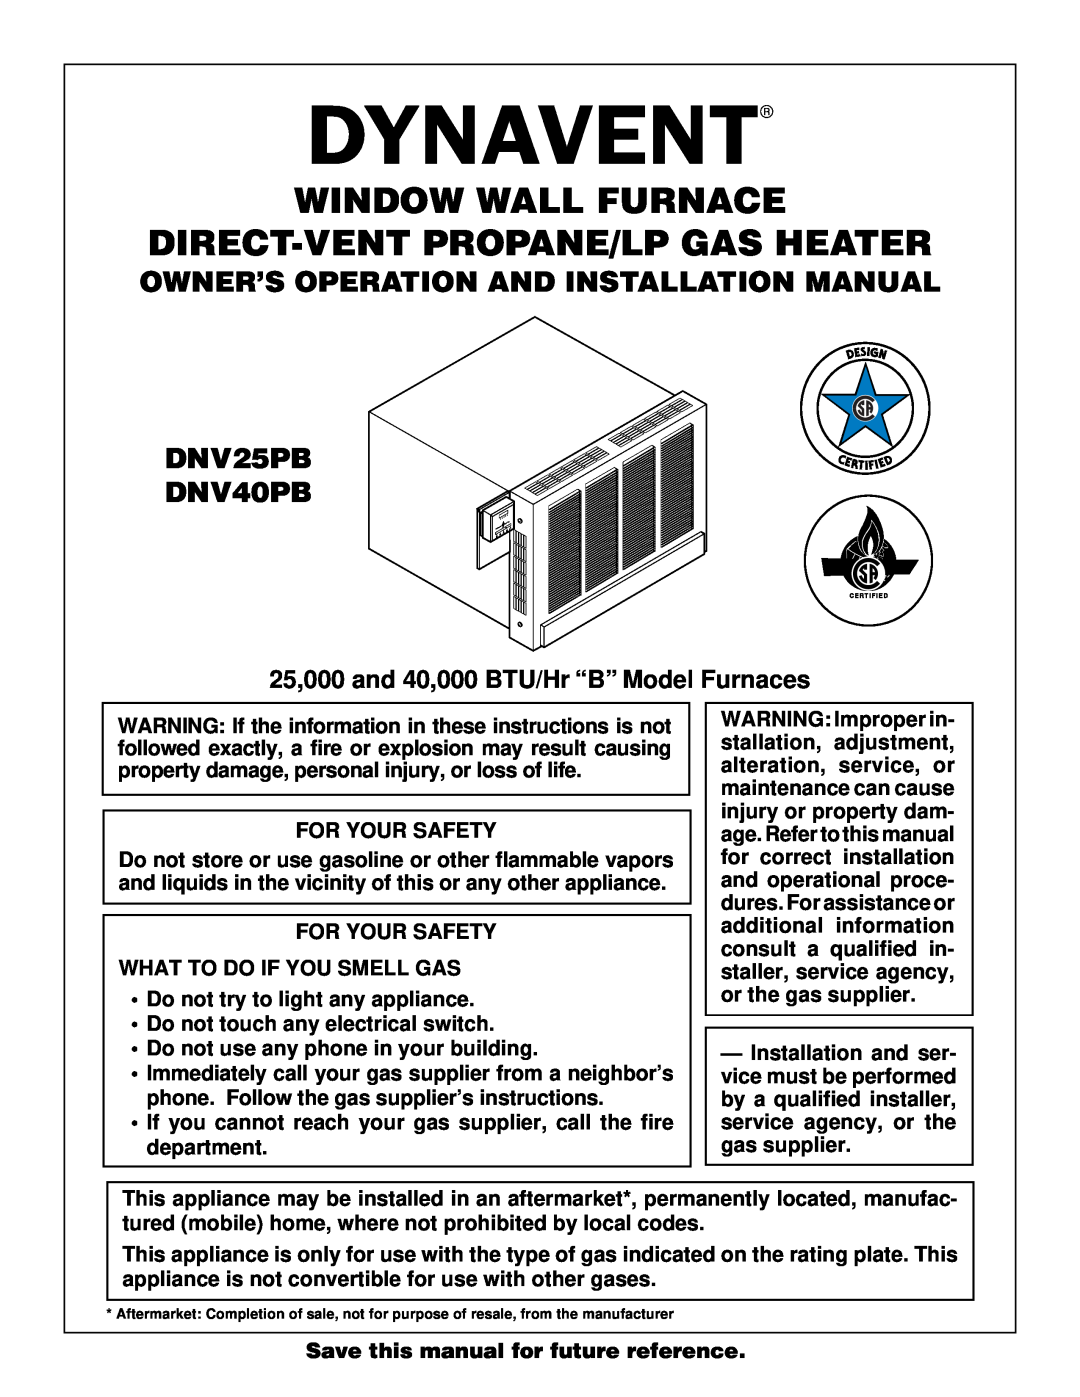 Desa DNV40PB, DNV25PB installation manual Window Wall Furnace, Direct-Ventpropane/Lp Gas Heater, Dynavent 